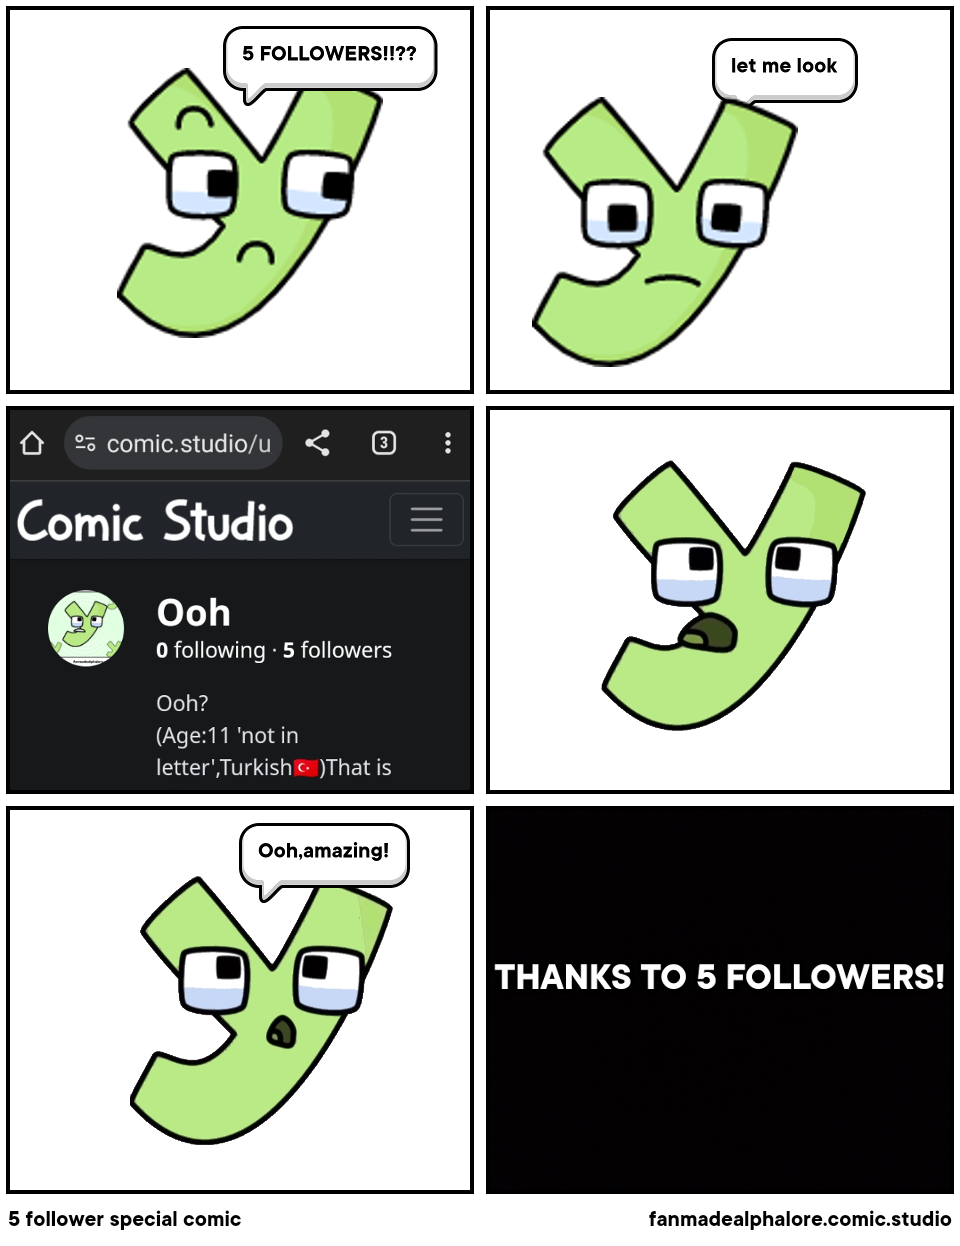 5 follower special comic